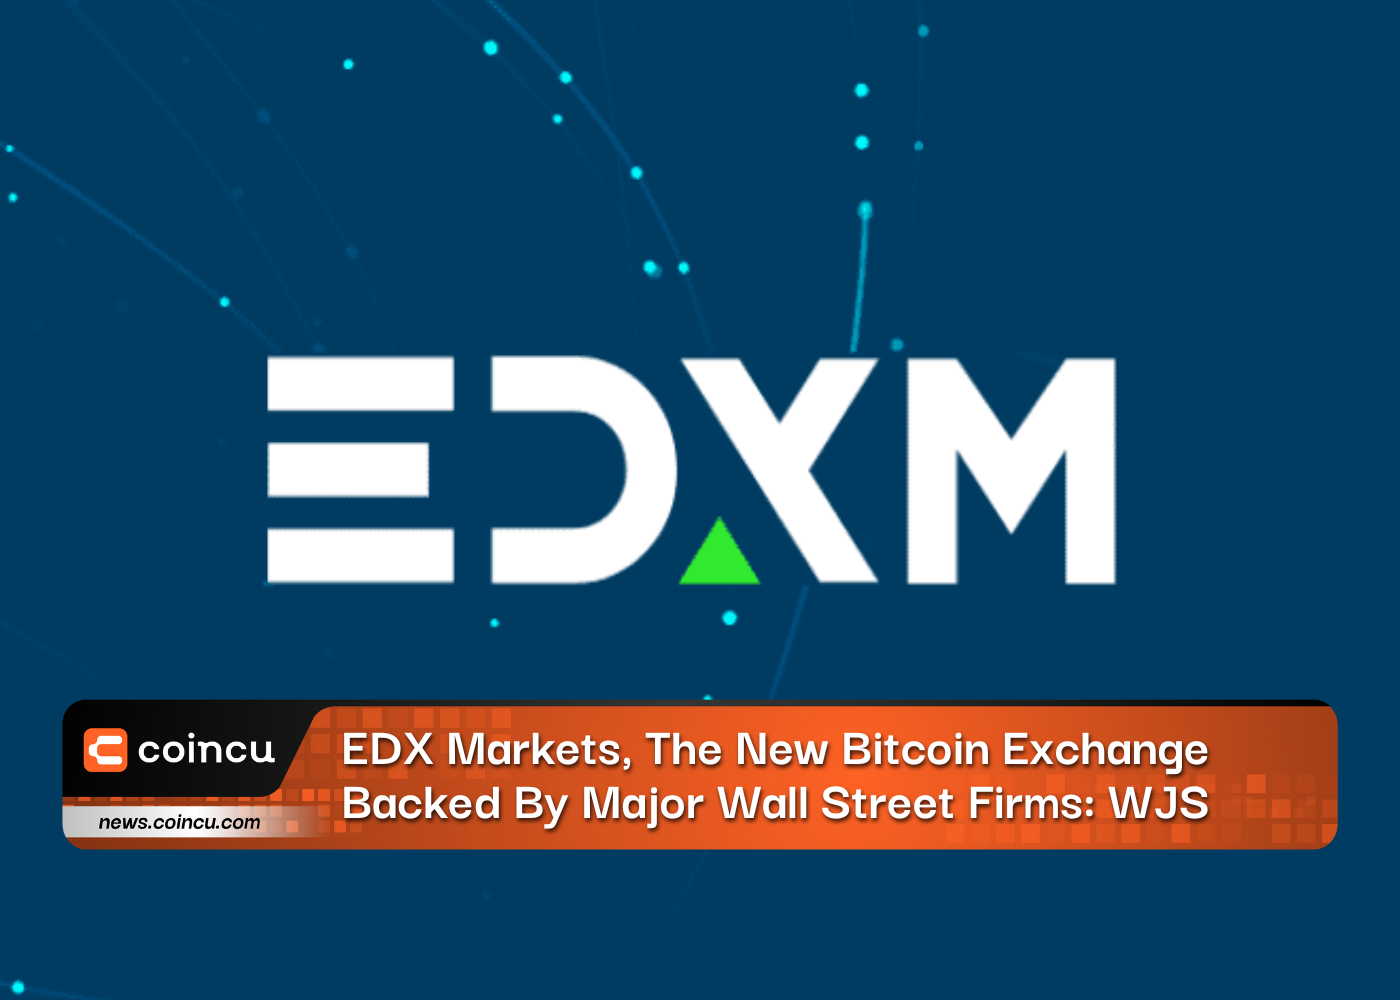 EDX Markets、大手ウォール街企業が支援する新しいビットコイン取引所: WJS